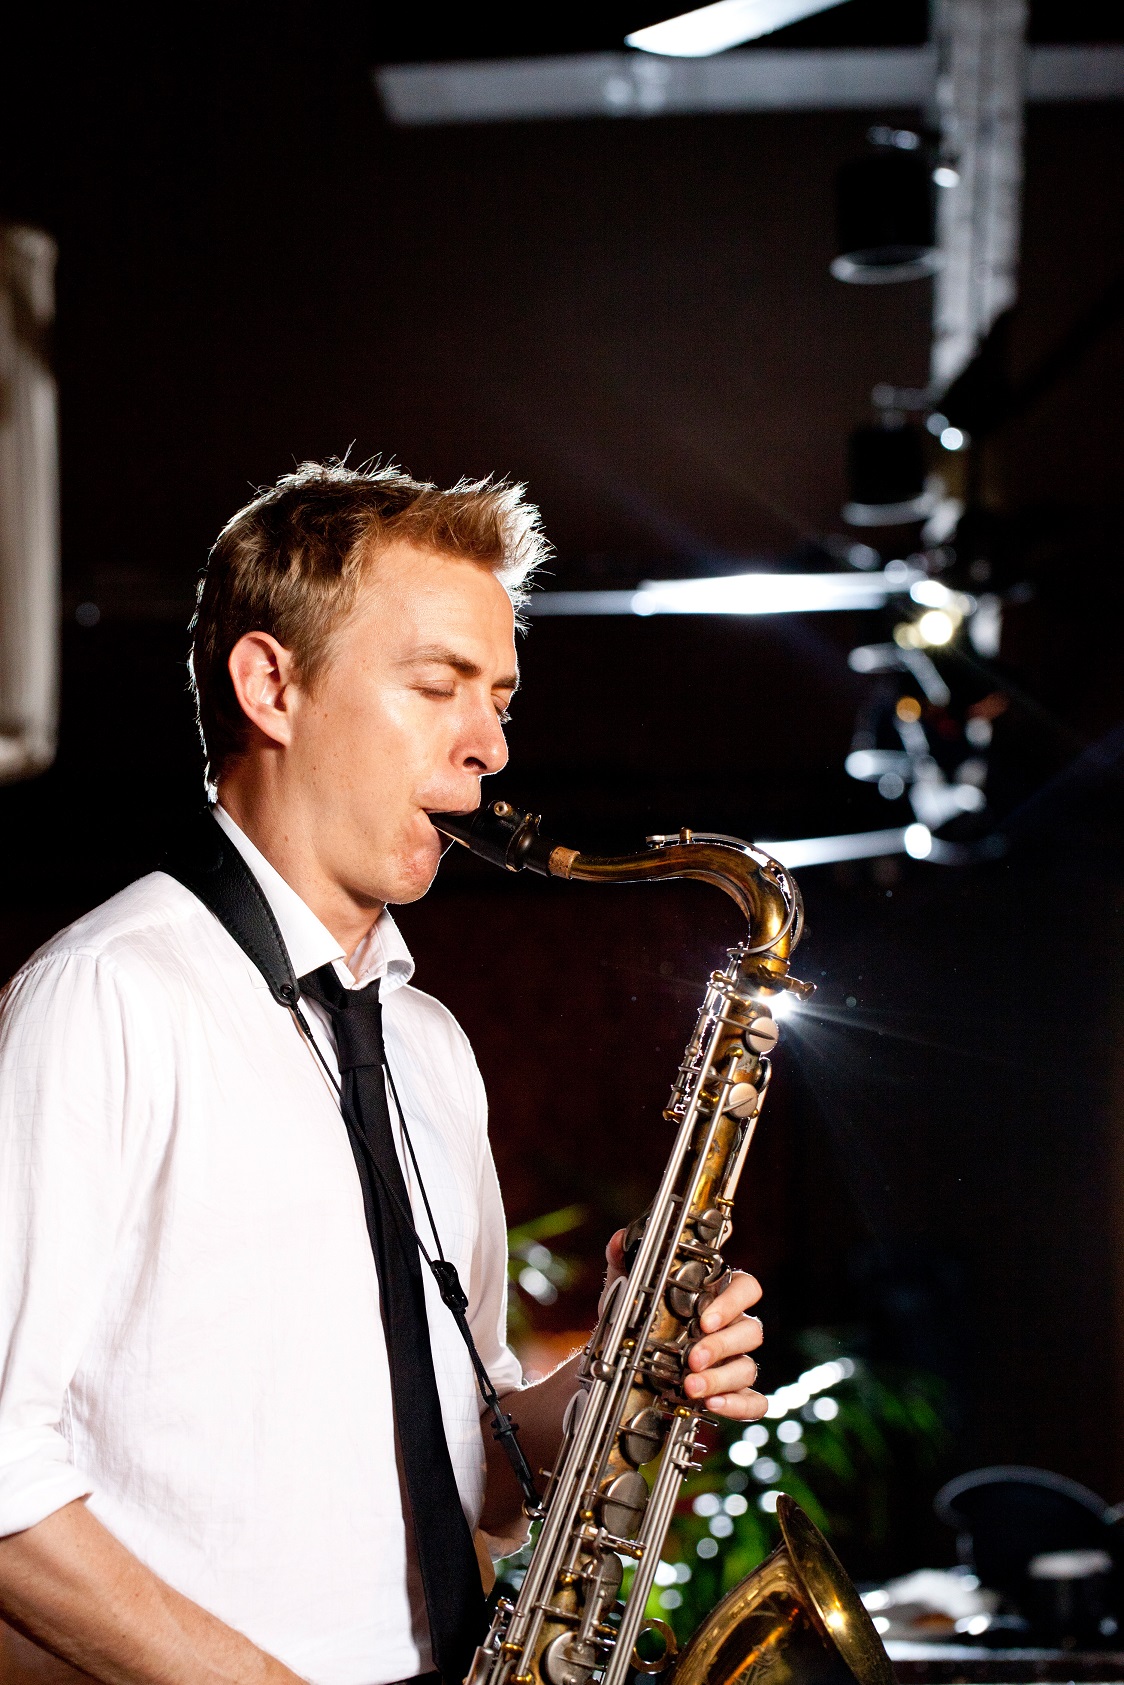 Saxophone Tom Abbott Sydney Jazz Collective Band small